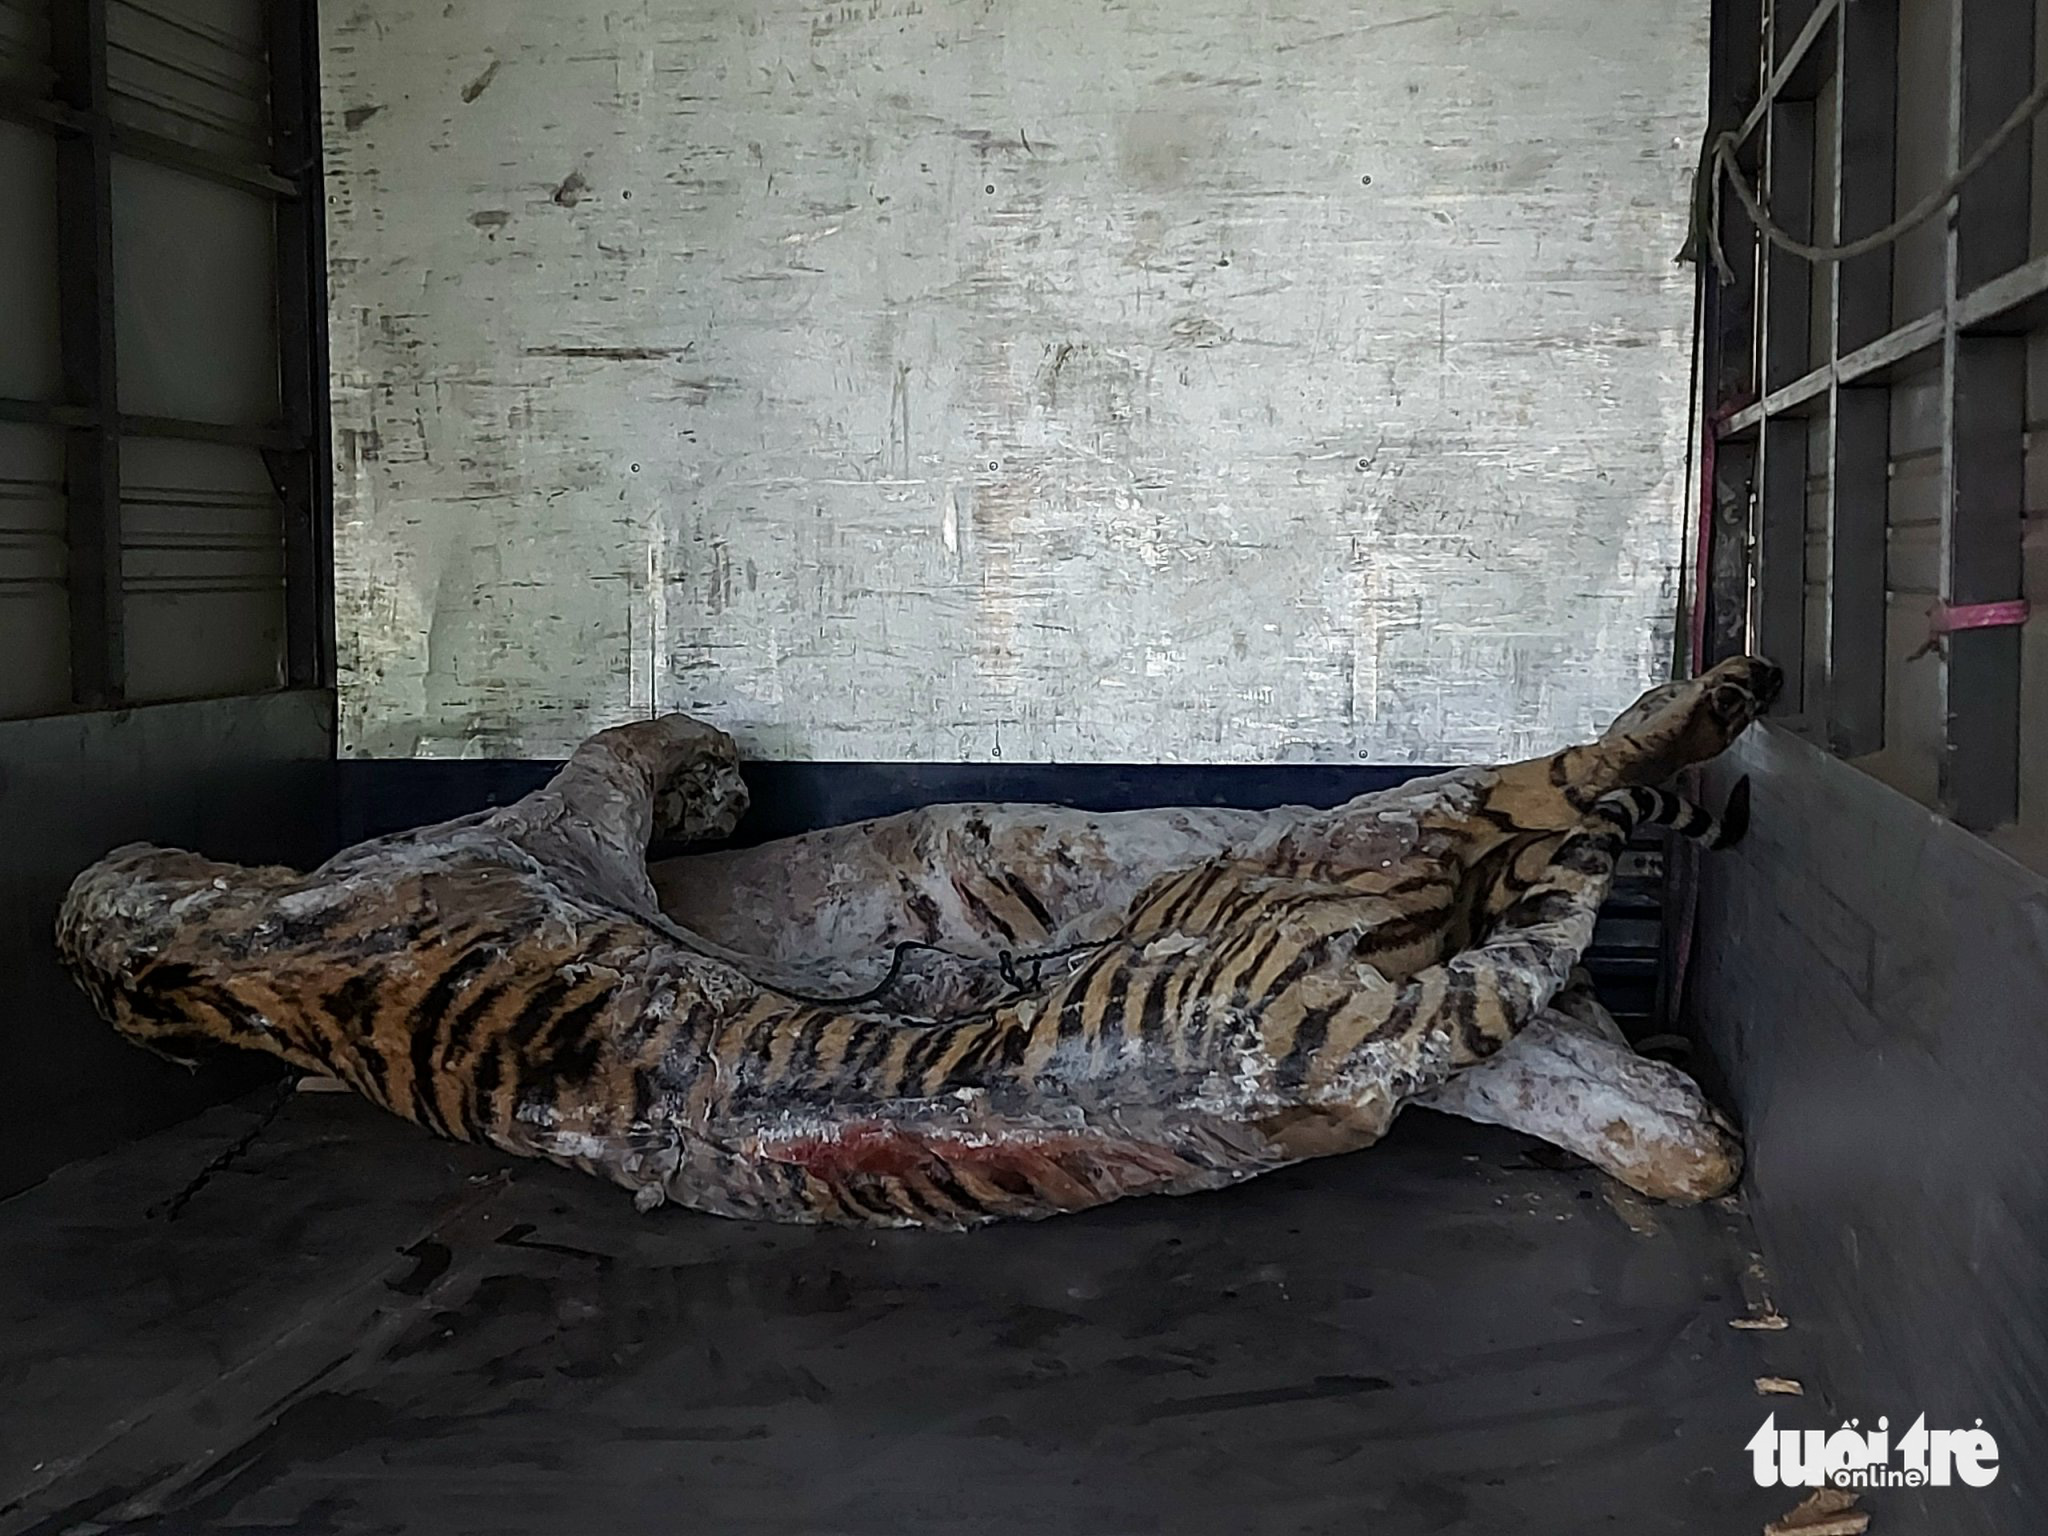 Vietnam museum to exhibit 9 tiger carcasses from illegal wildlife trade